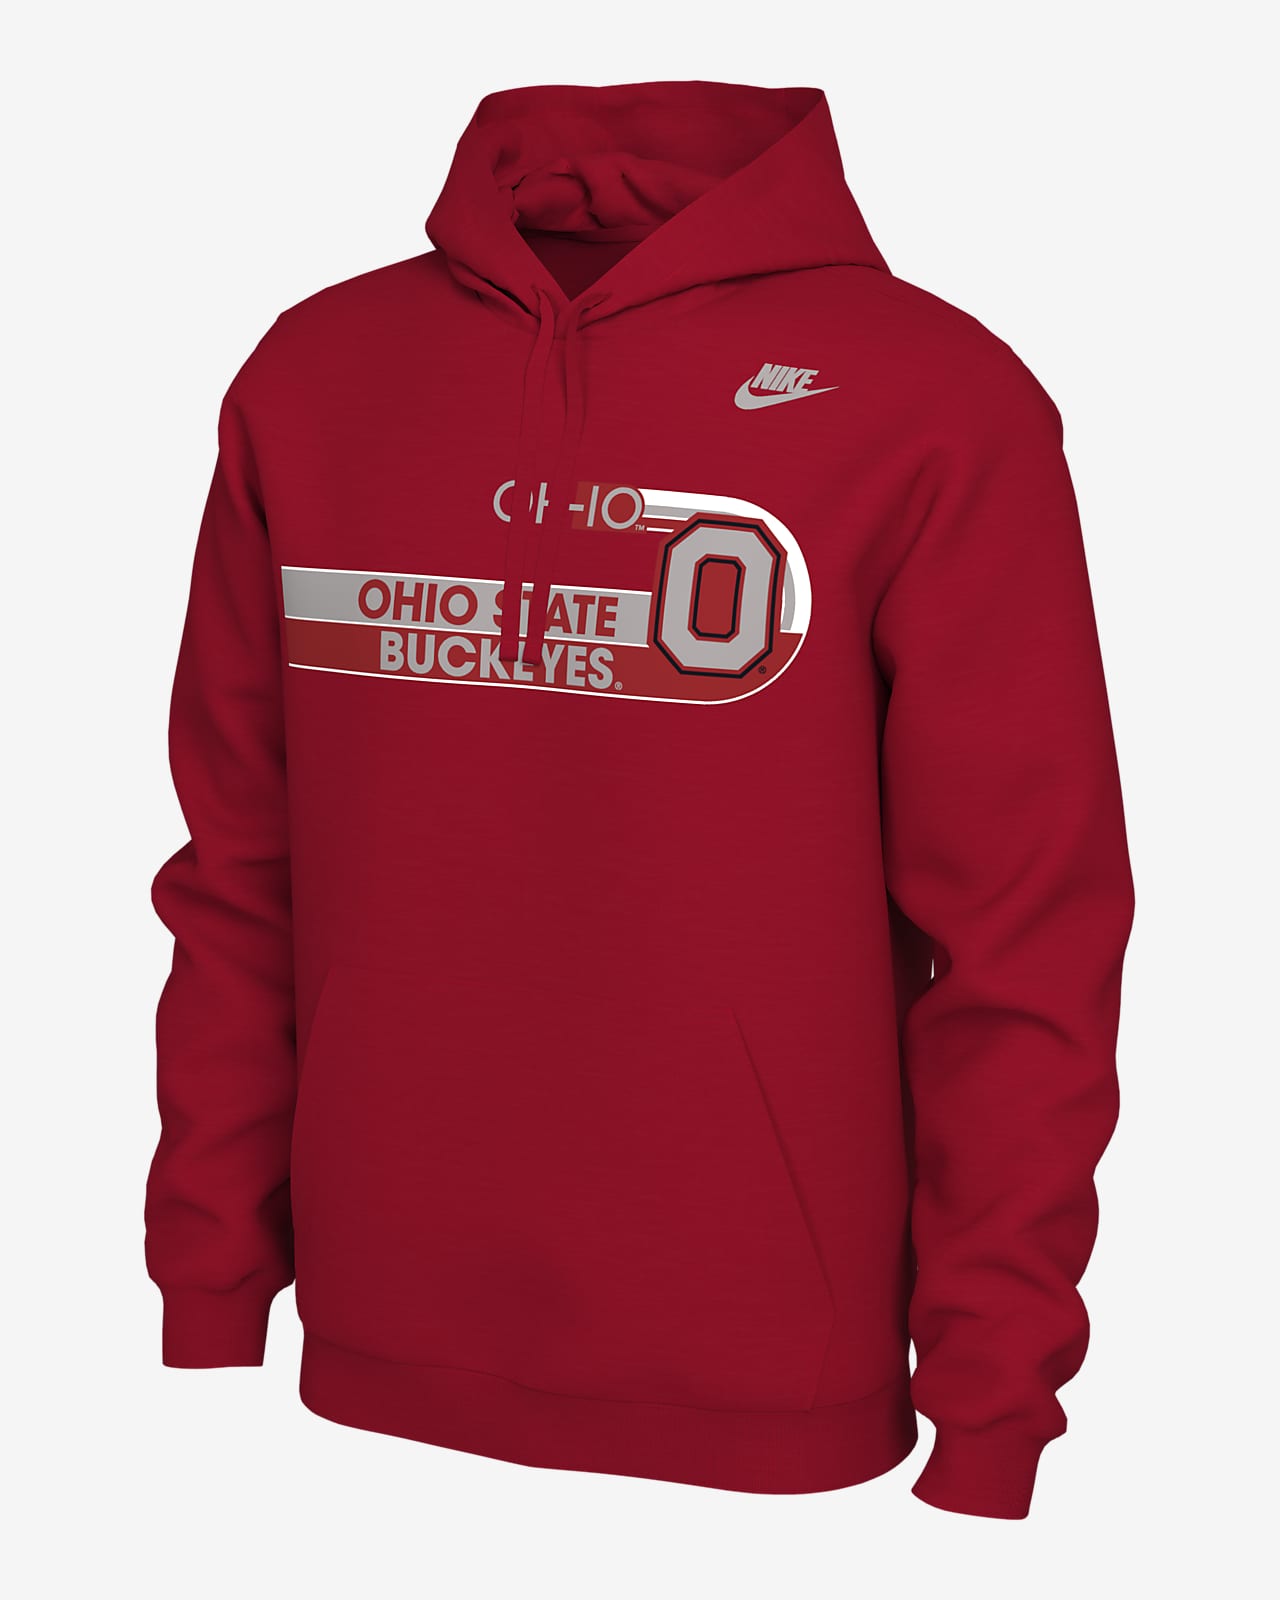 Ohio State Men's Nike College Hoodie